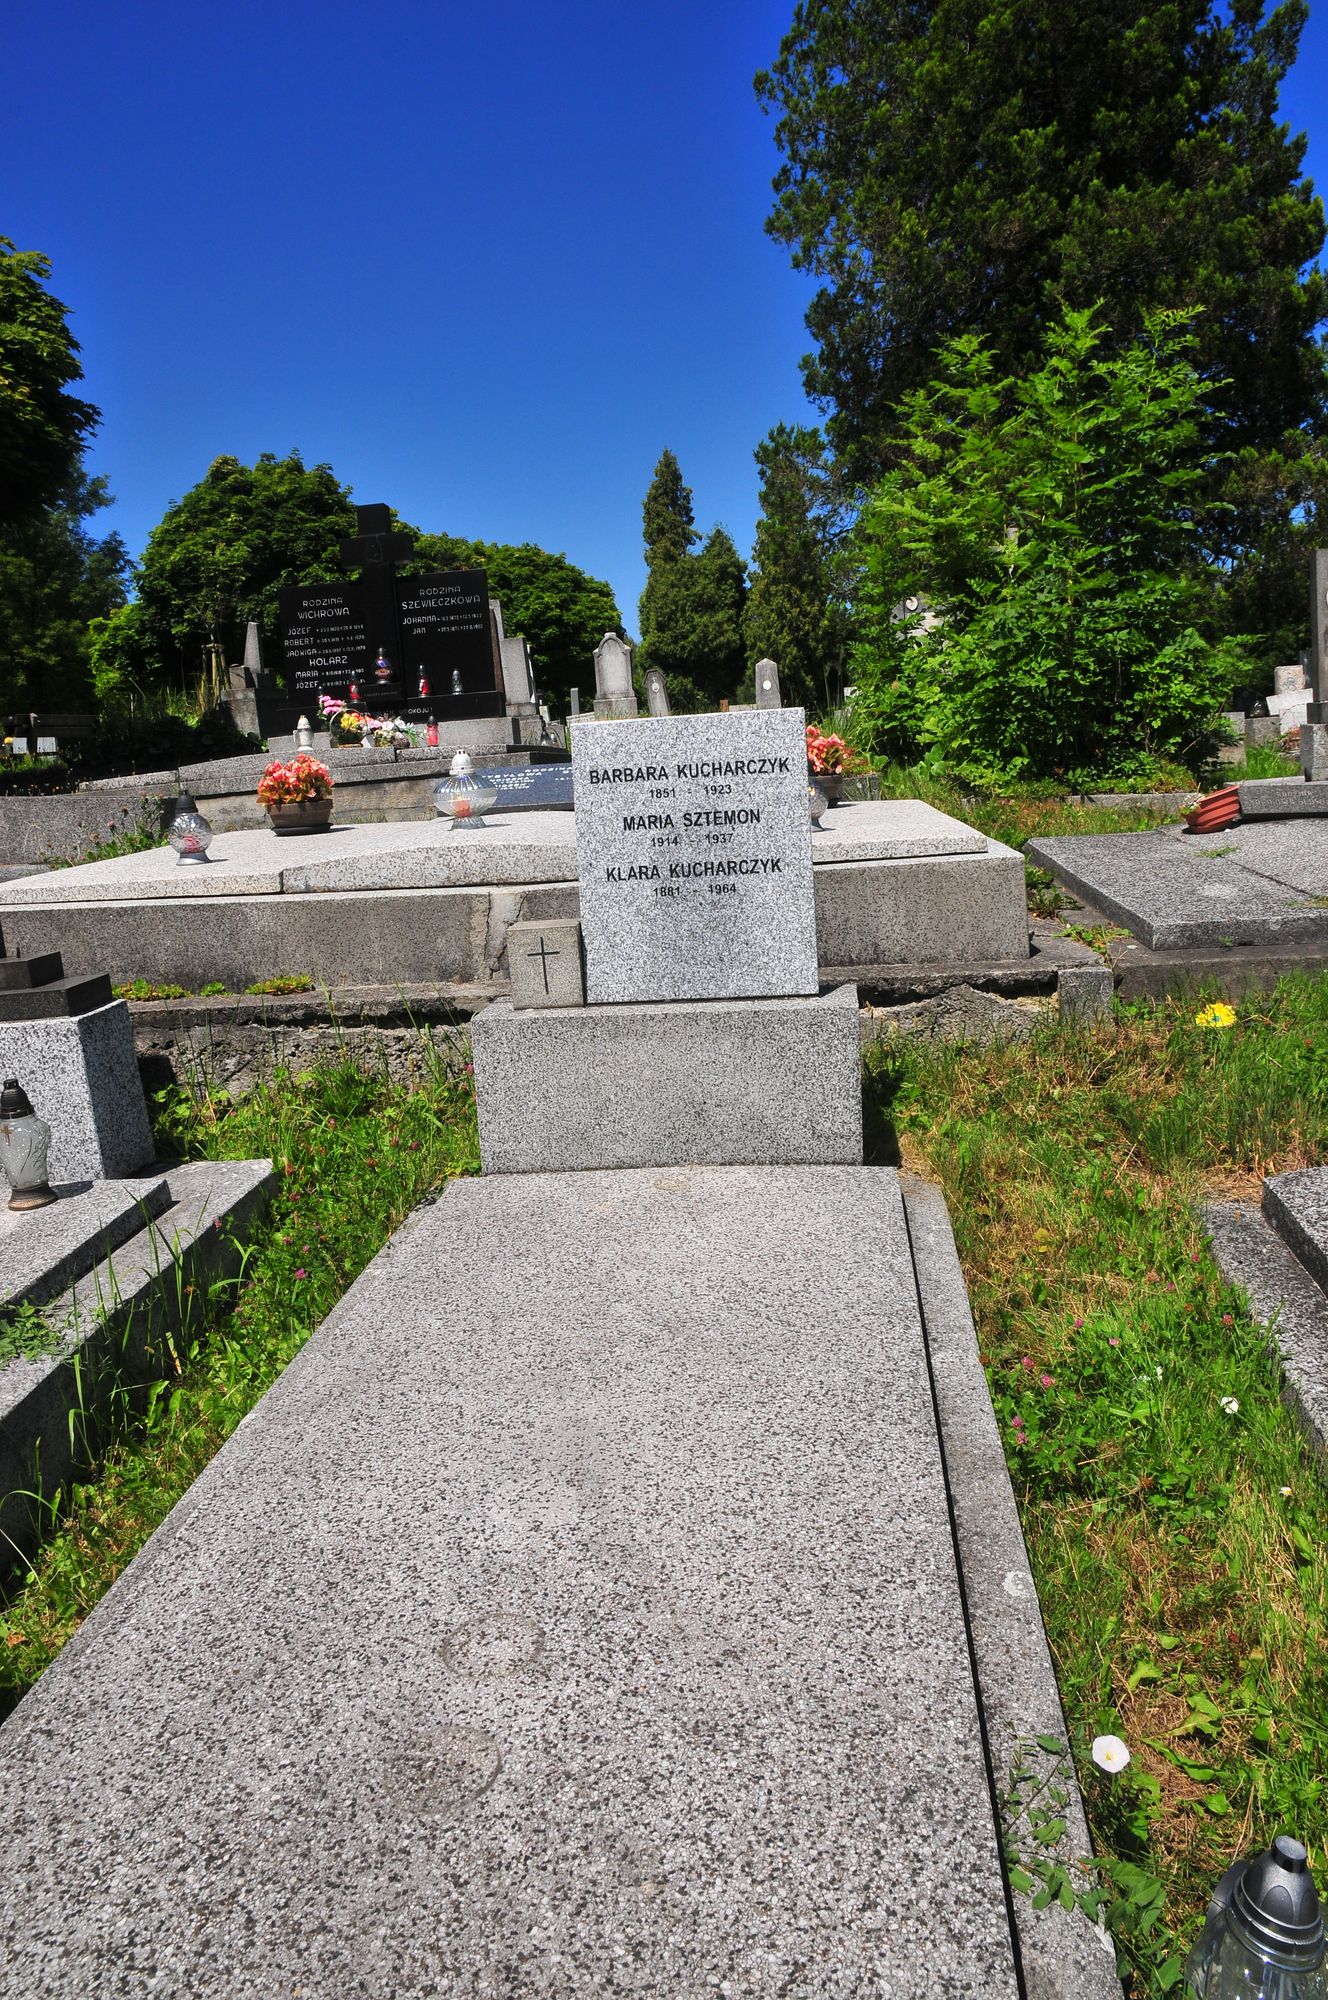 Tombstone of Barbara and Klara Kucharczyk, Maria Sztemon, Karviná Doły cemetery, state 2022